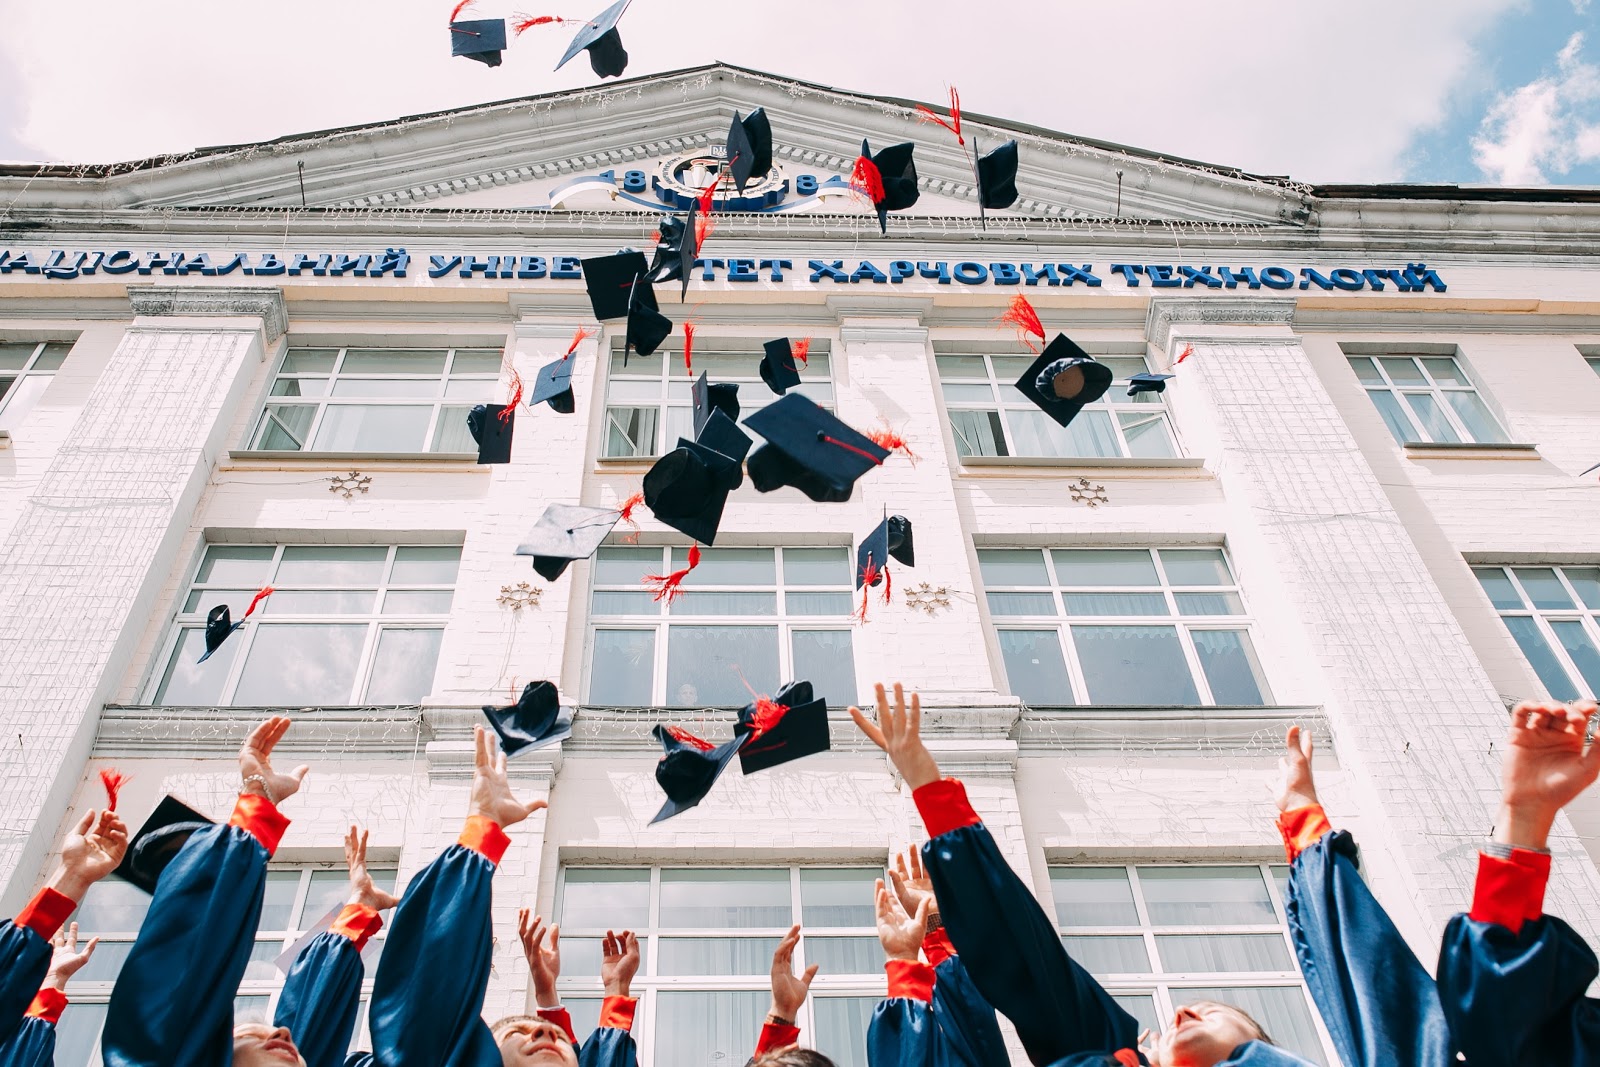 graduation class tossing graduation caps in the air